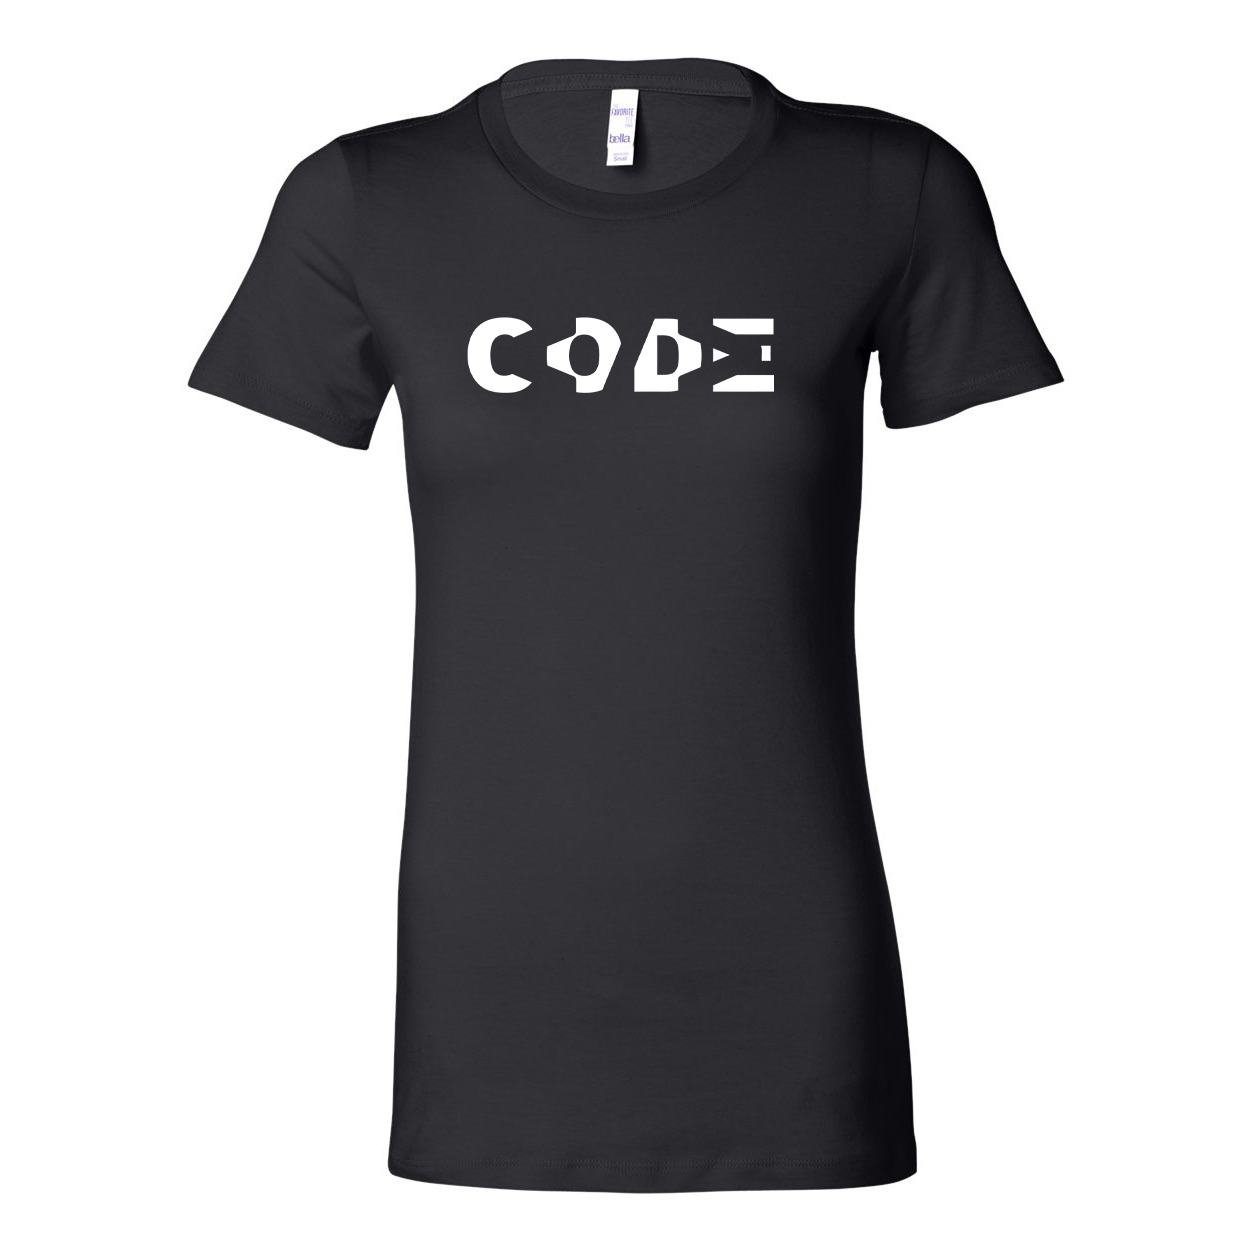 Code Tag Logo Classic Women's Fitted Tri-Blend T-Shirt Black (White Logo)